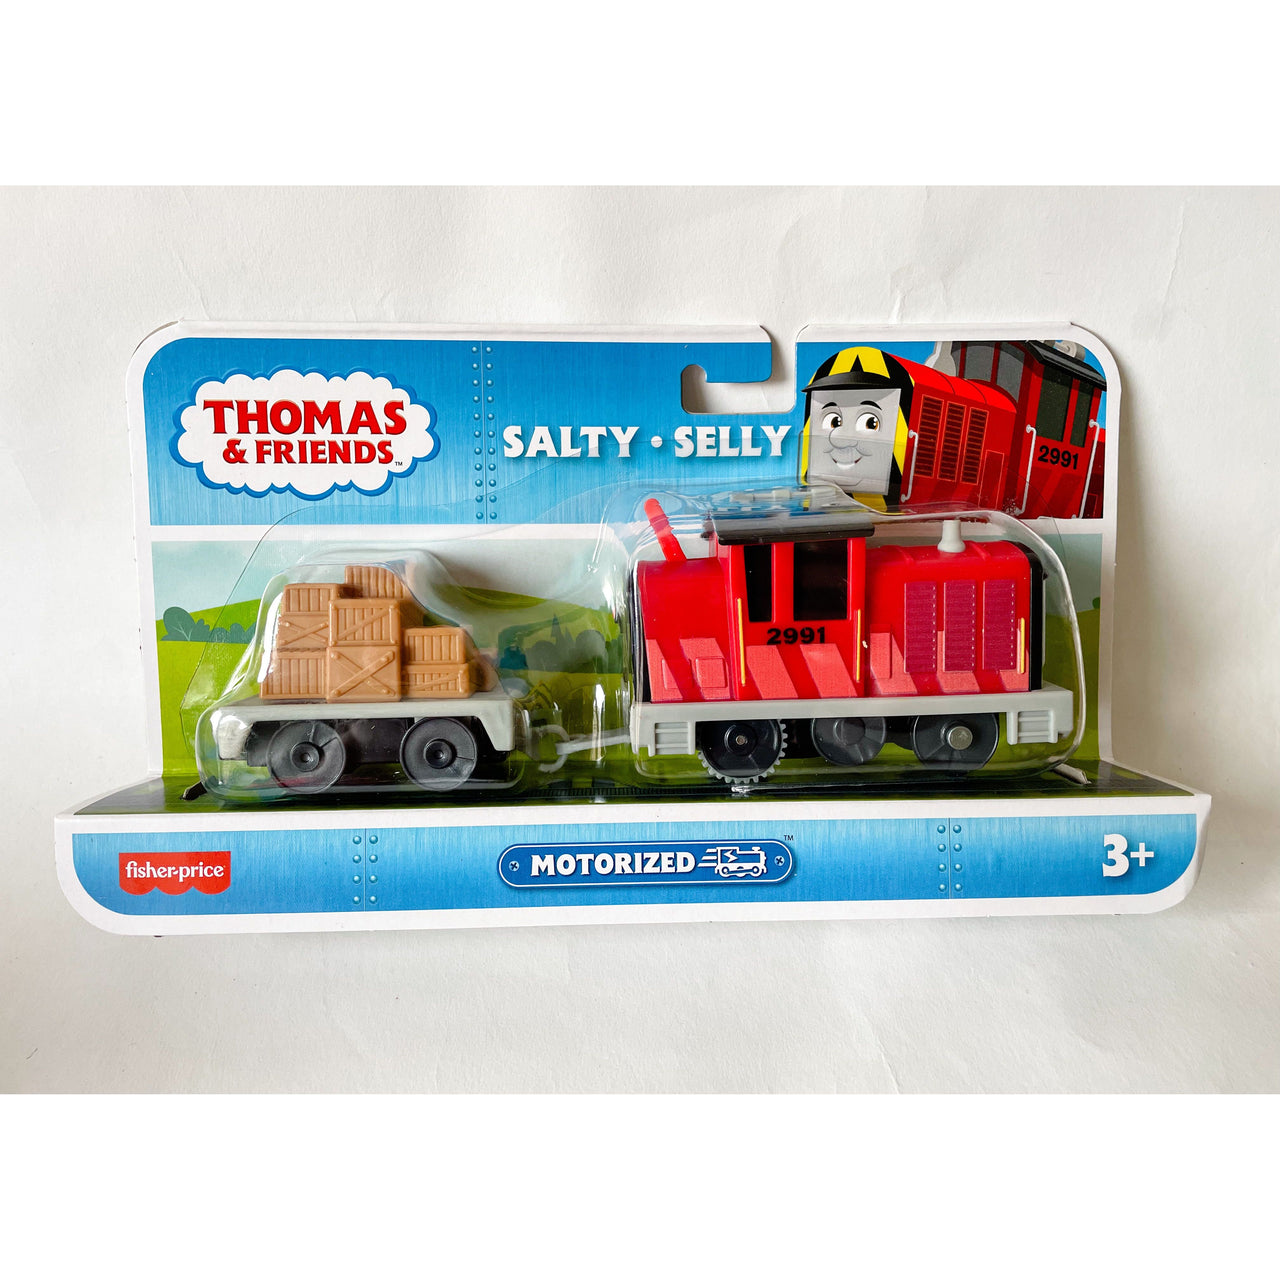 Thomas & Friends Motorised Salty Thomas & Friends